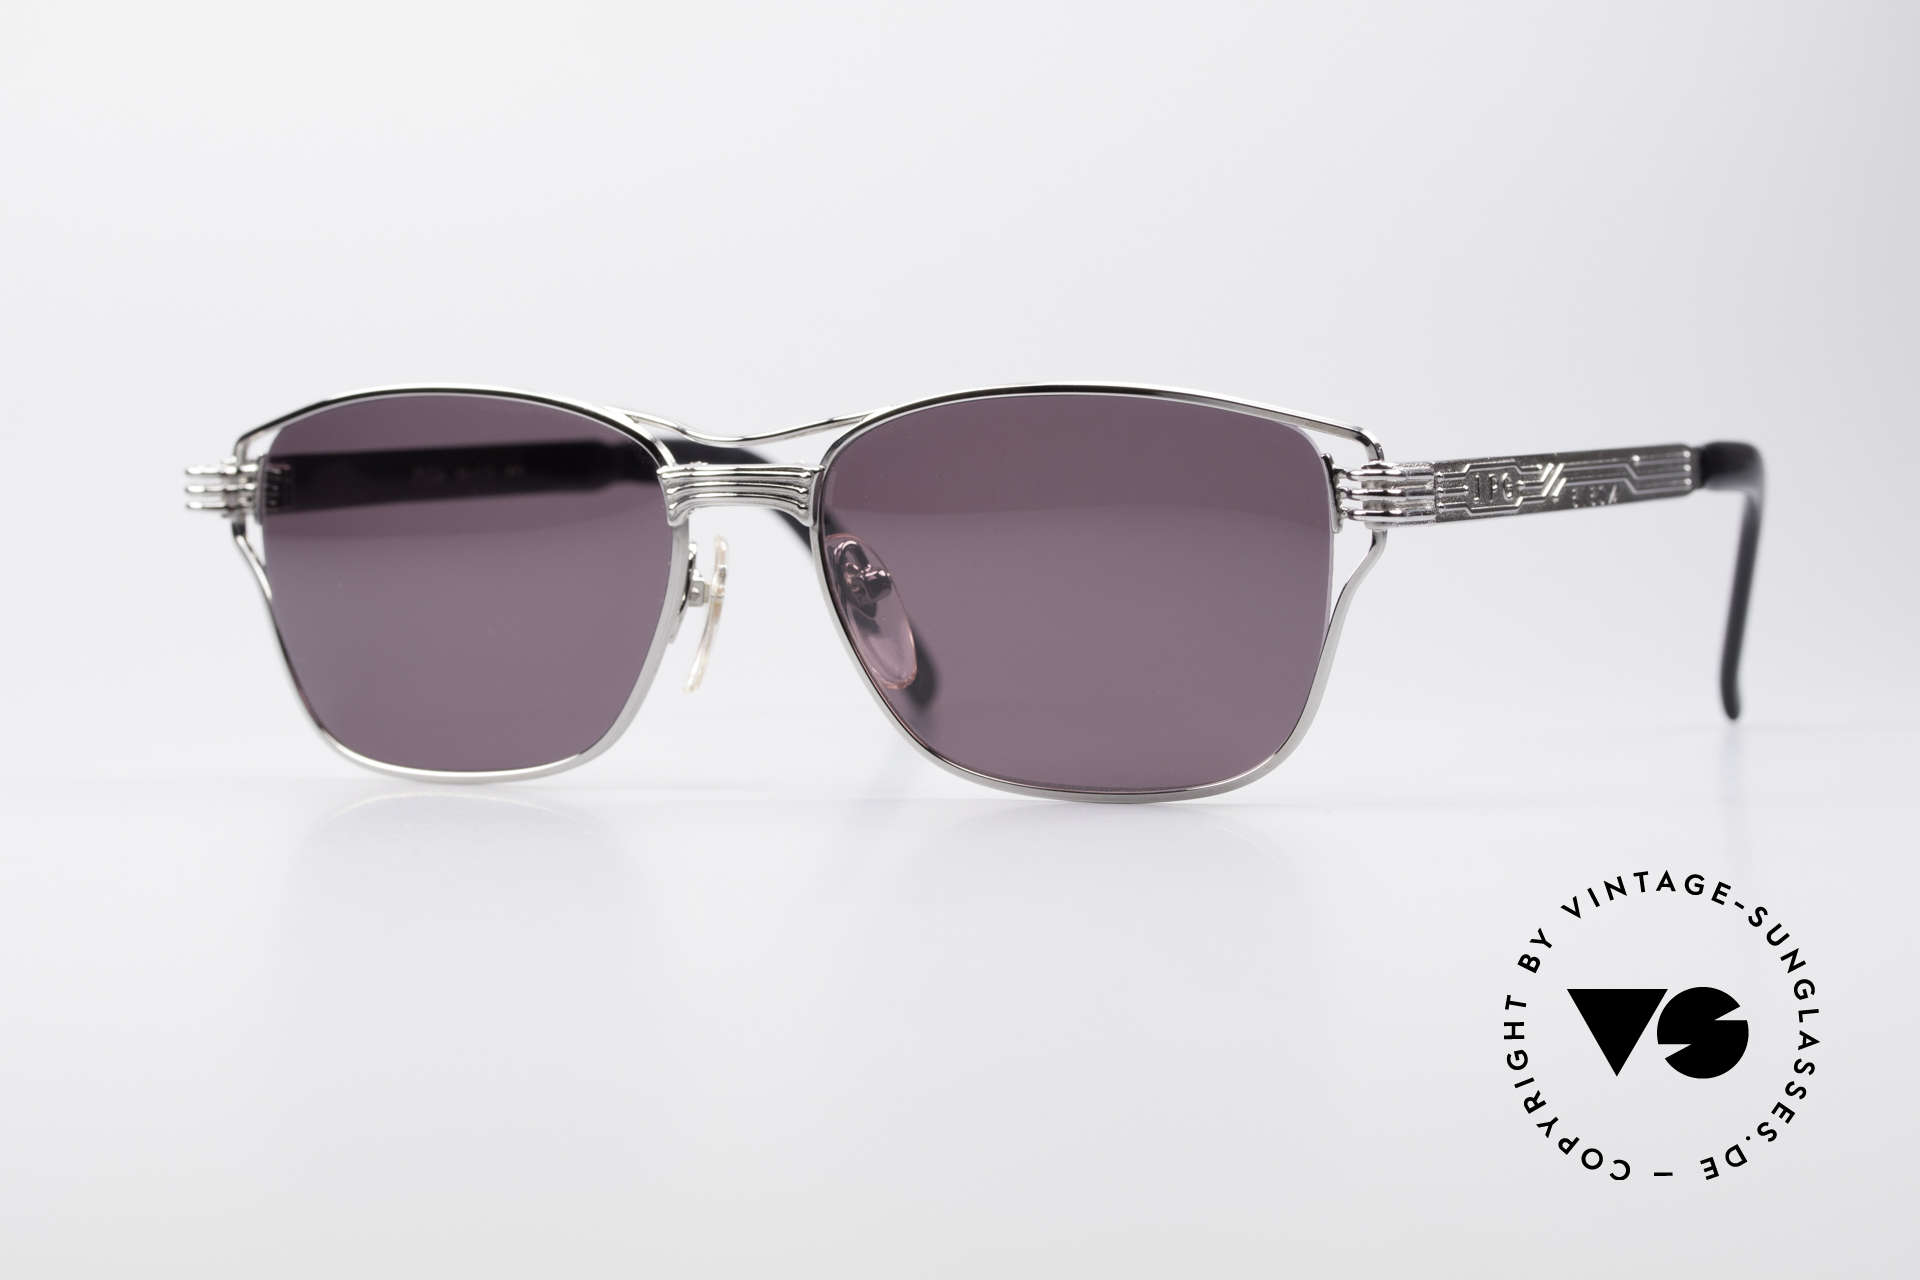 Jean Paul Gaultier 56-4173 Striking Square Sunglasses, square, striking designer sunglasses by Gaultier, Made for Men